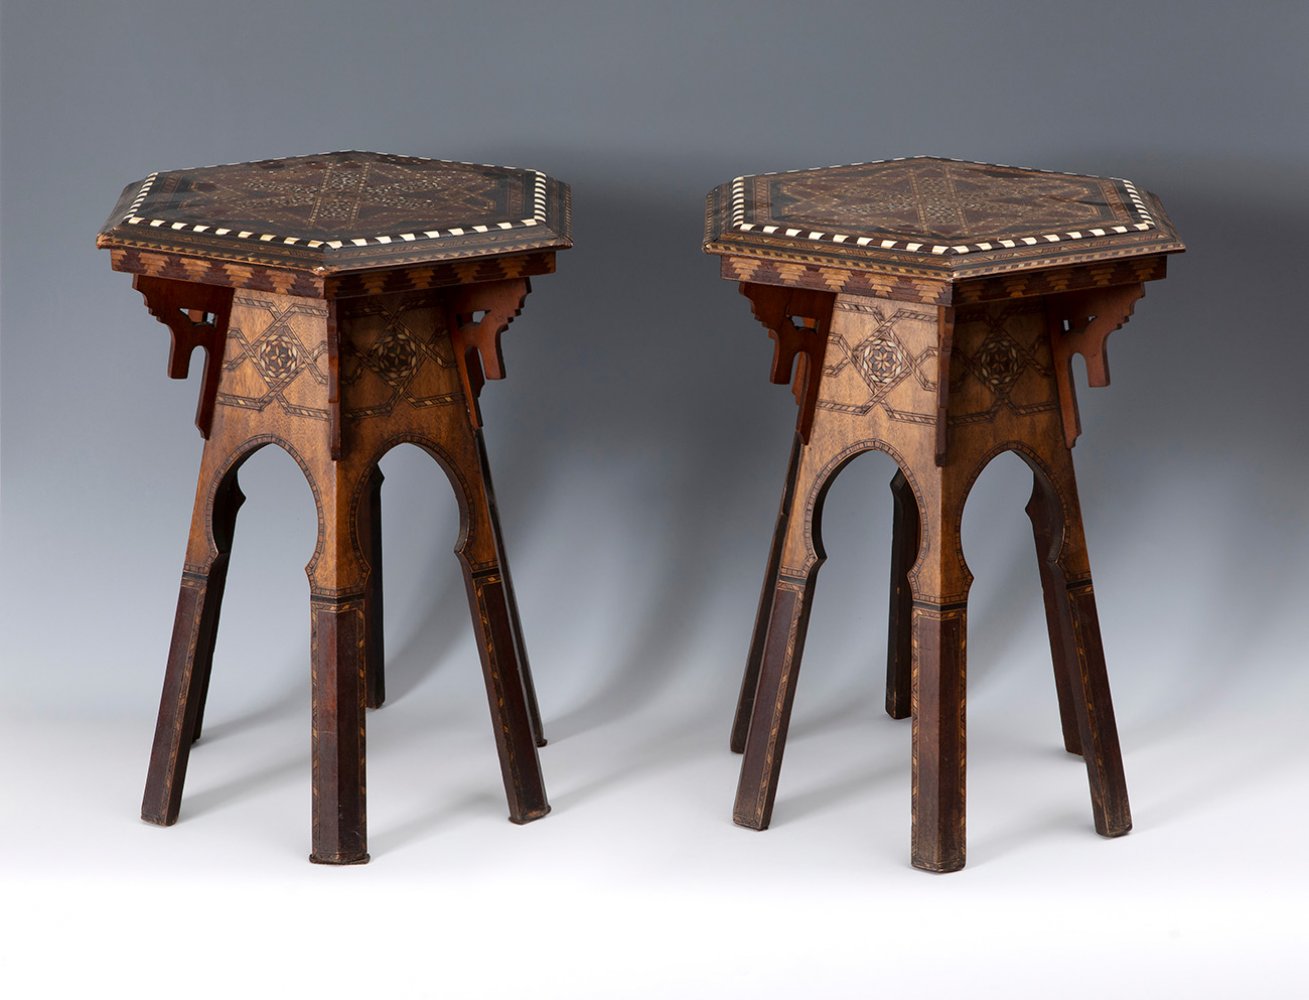 Pair of 19th century Granadian coffee tables.Walnut wood and bone inlay.Measurements: 45 x 34 x 38